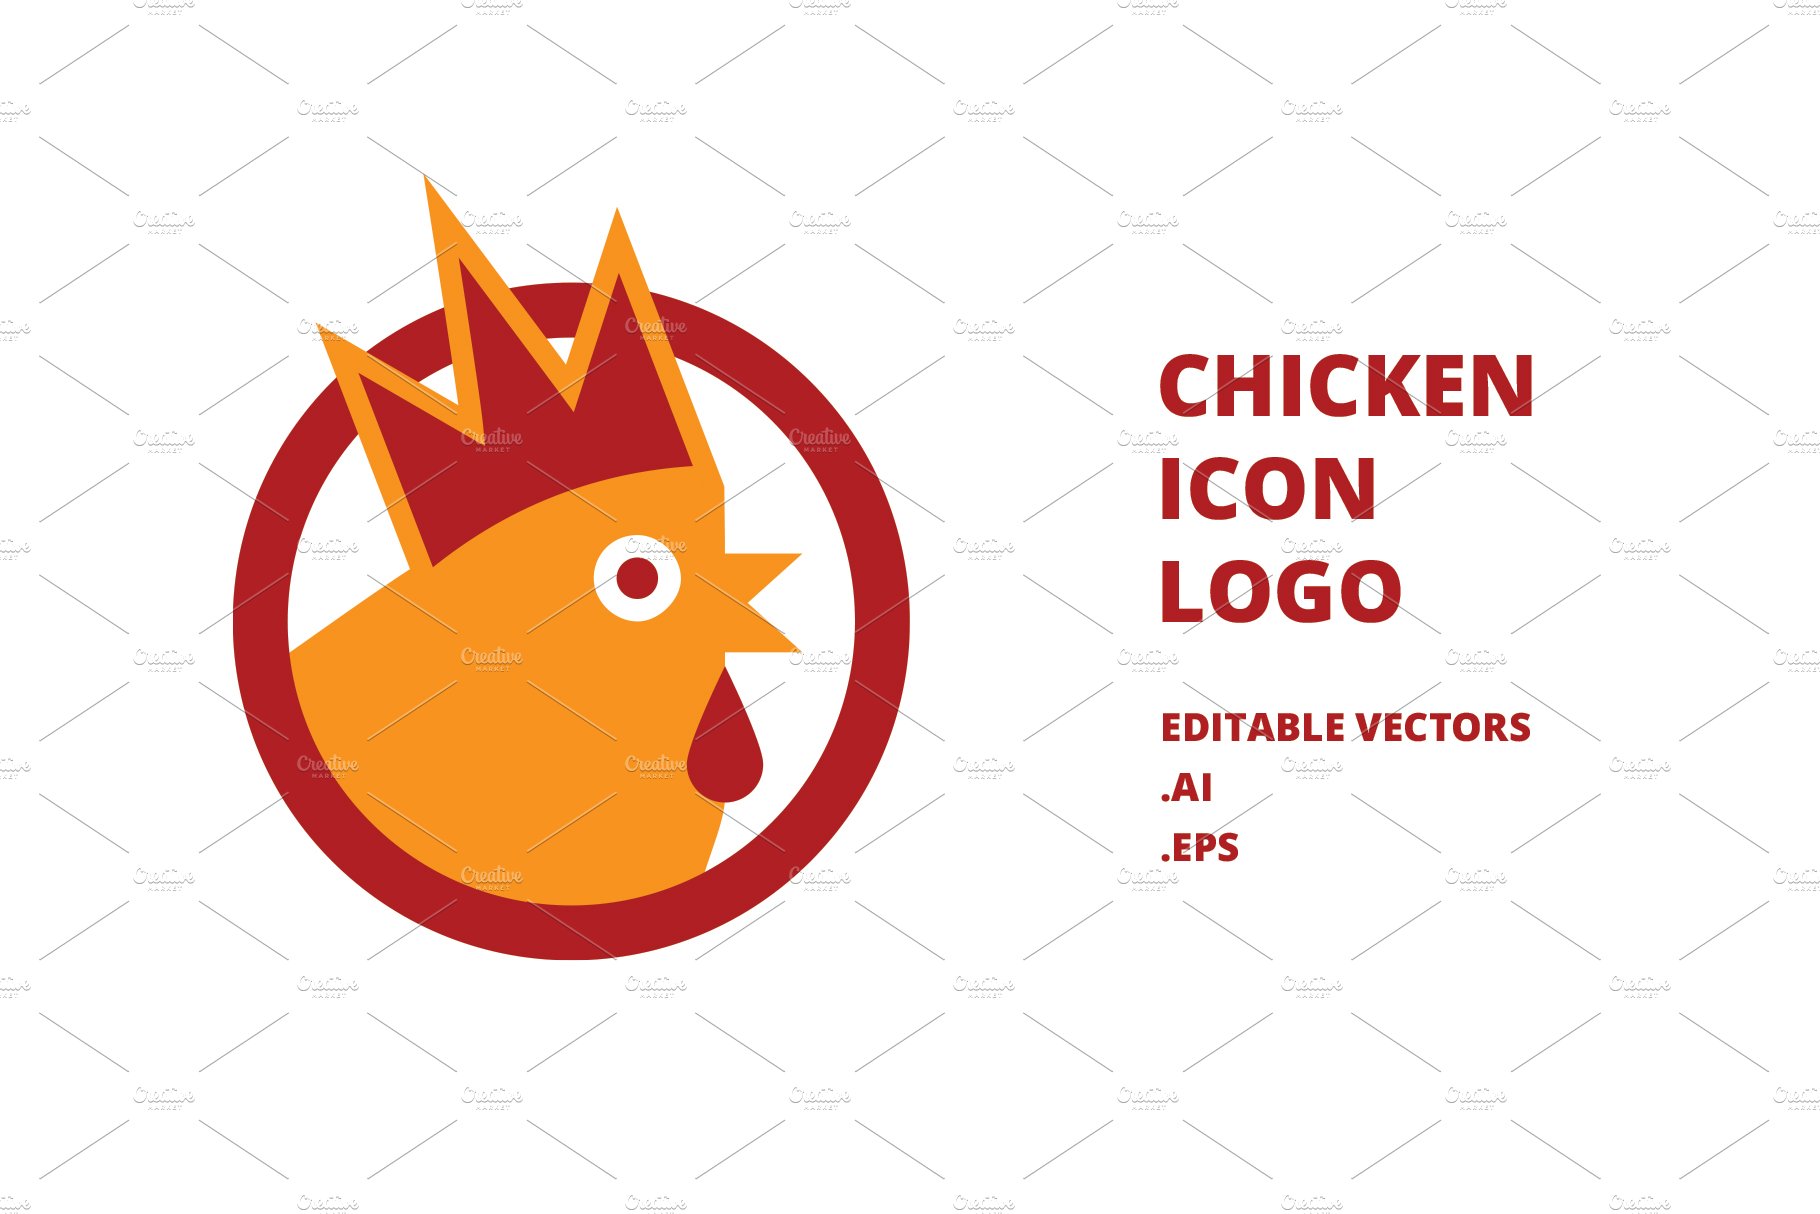 Chicken Icon / Logo cover image.